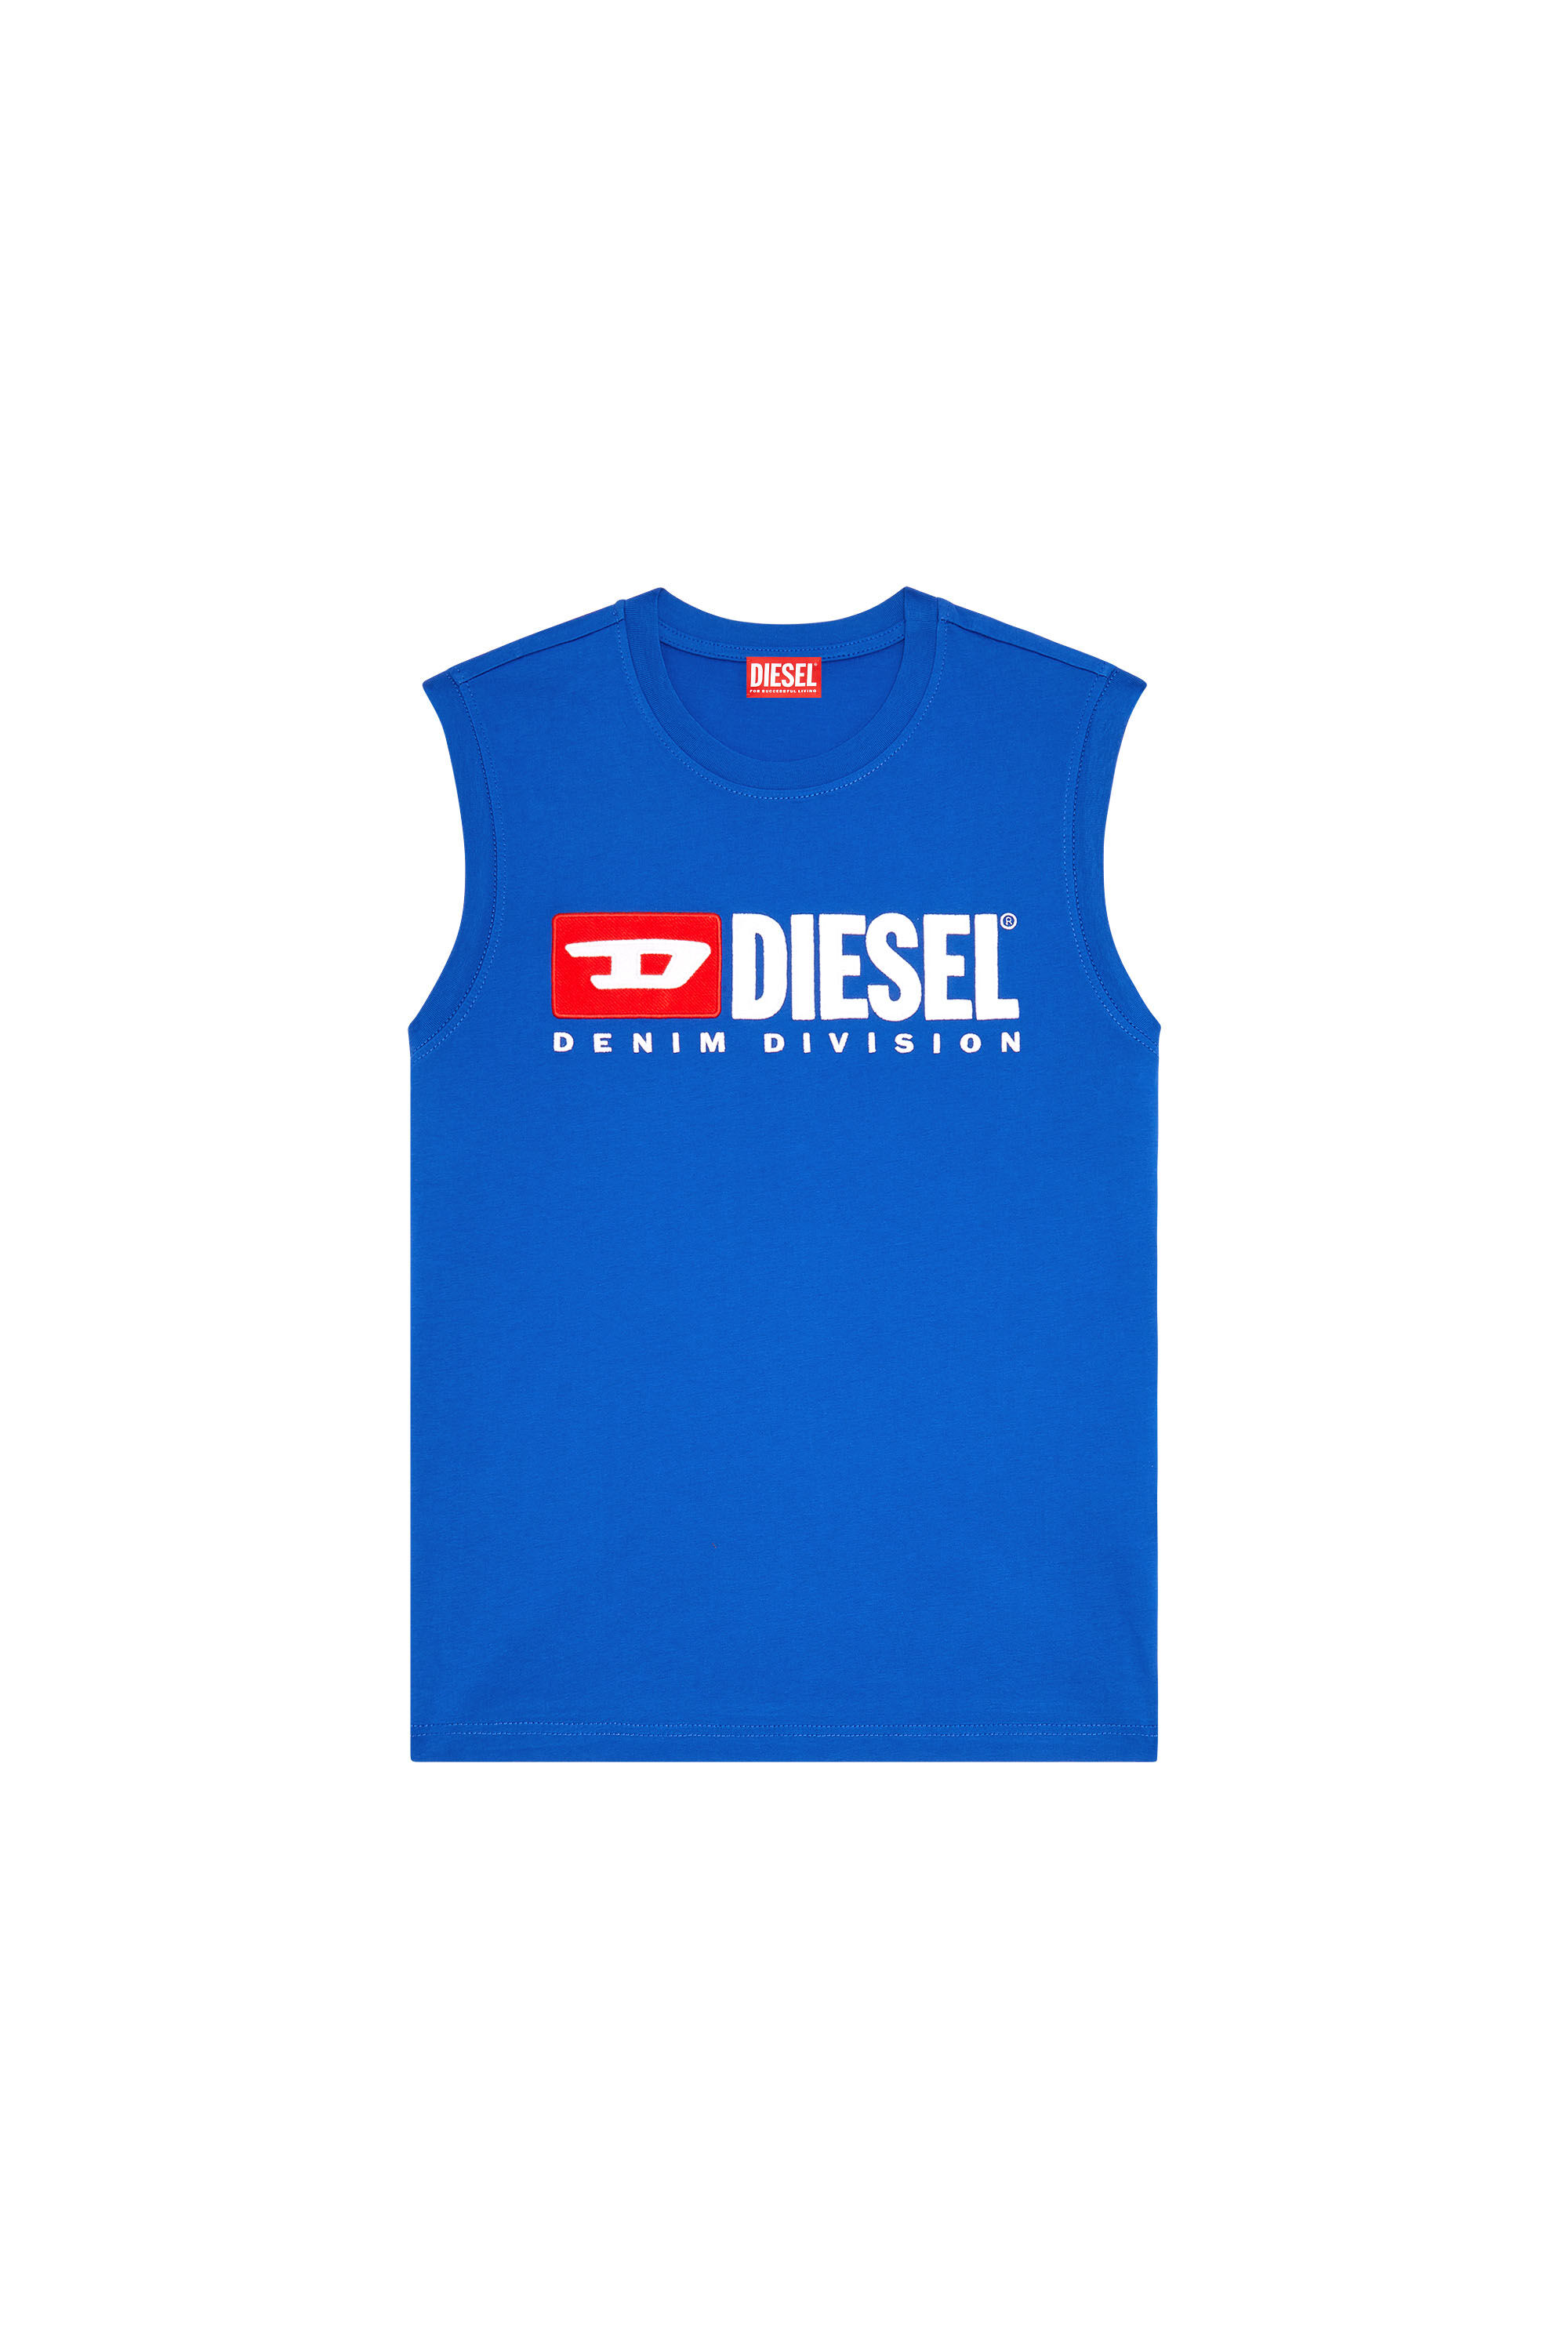 Diesel - T-ISCO-DIV, Blue - Image 2